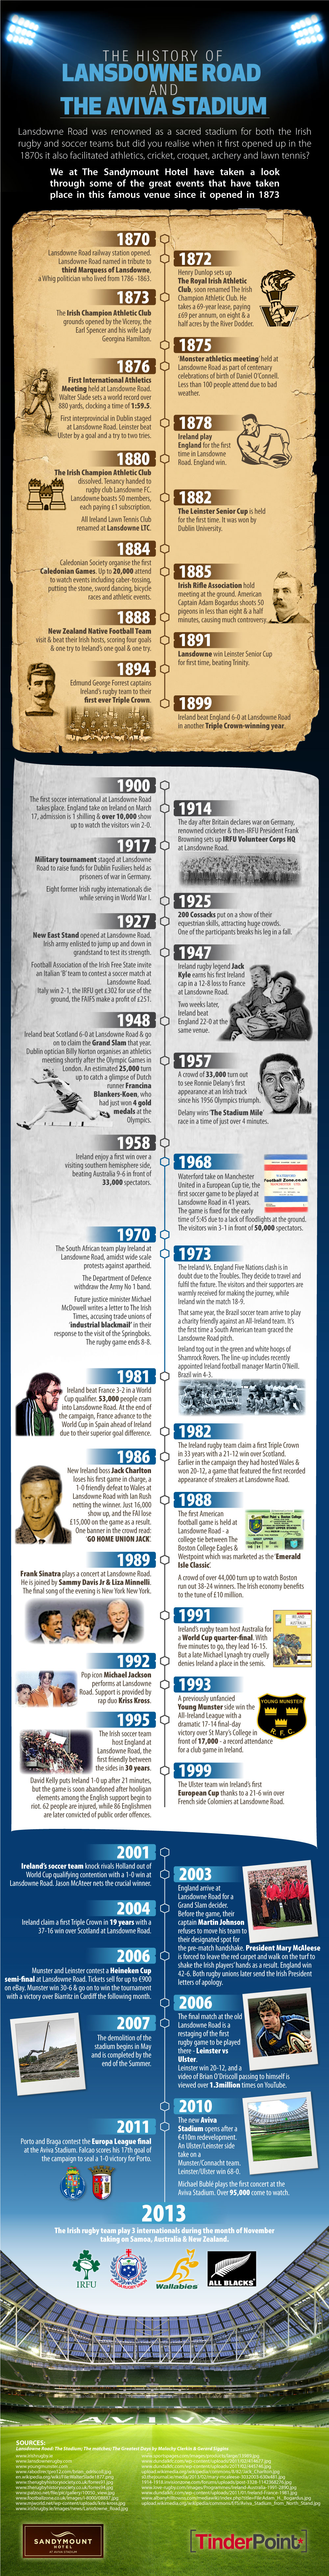 The History of Lansdowne Road and The Aviva Stadium